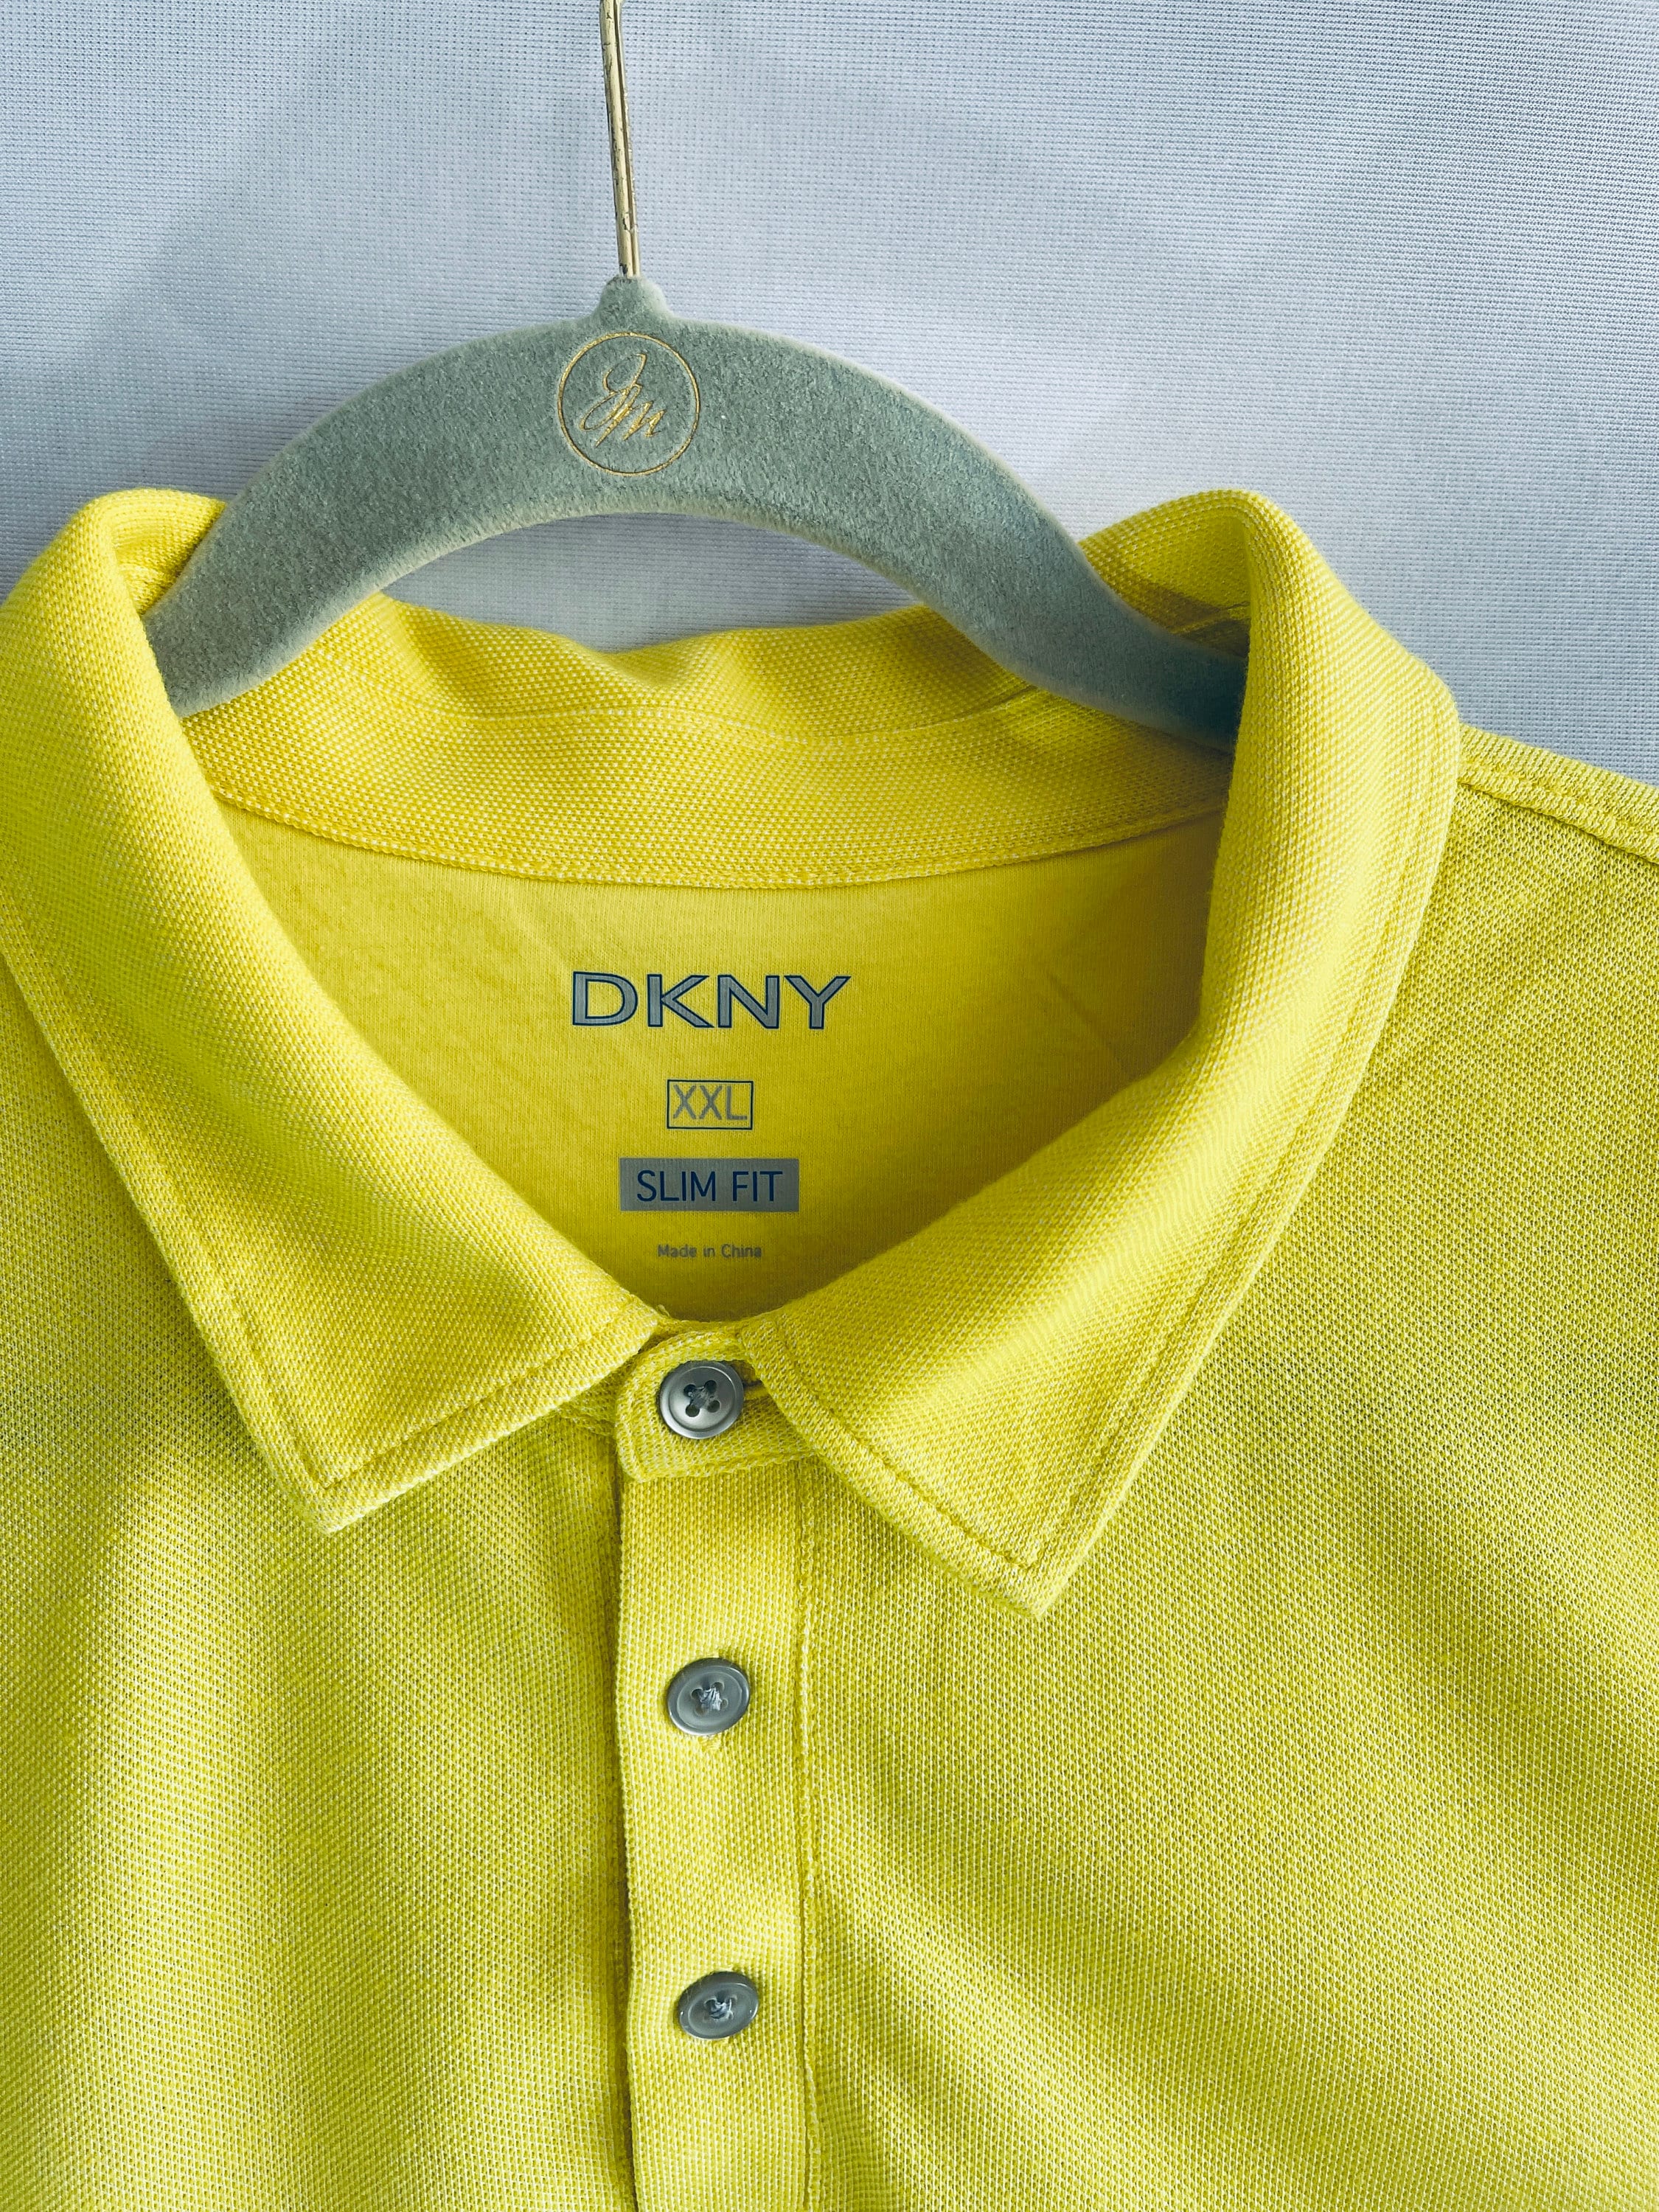 DKNY POLO T Shirt Custom Yellow Polo Shirt XXL Slim Fit Size Short Sleeves  